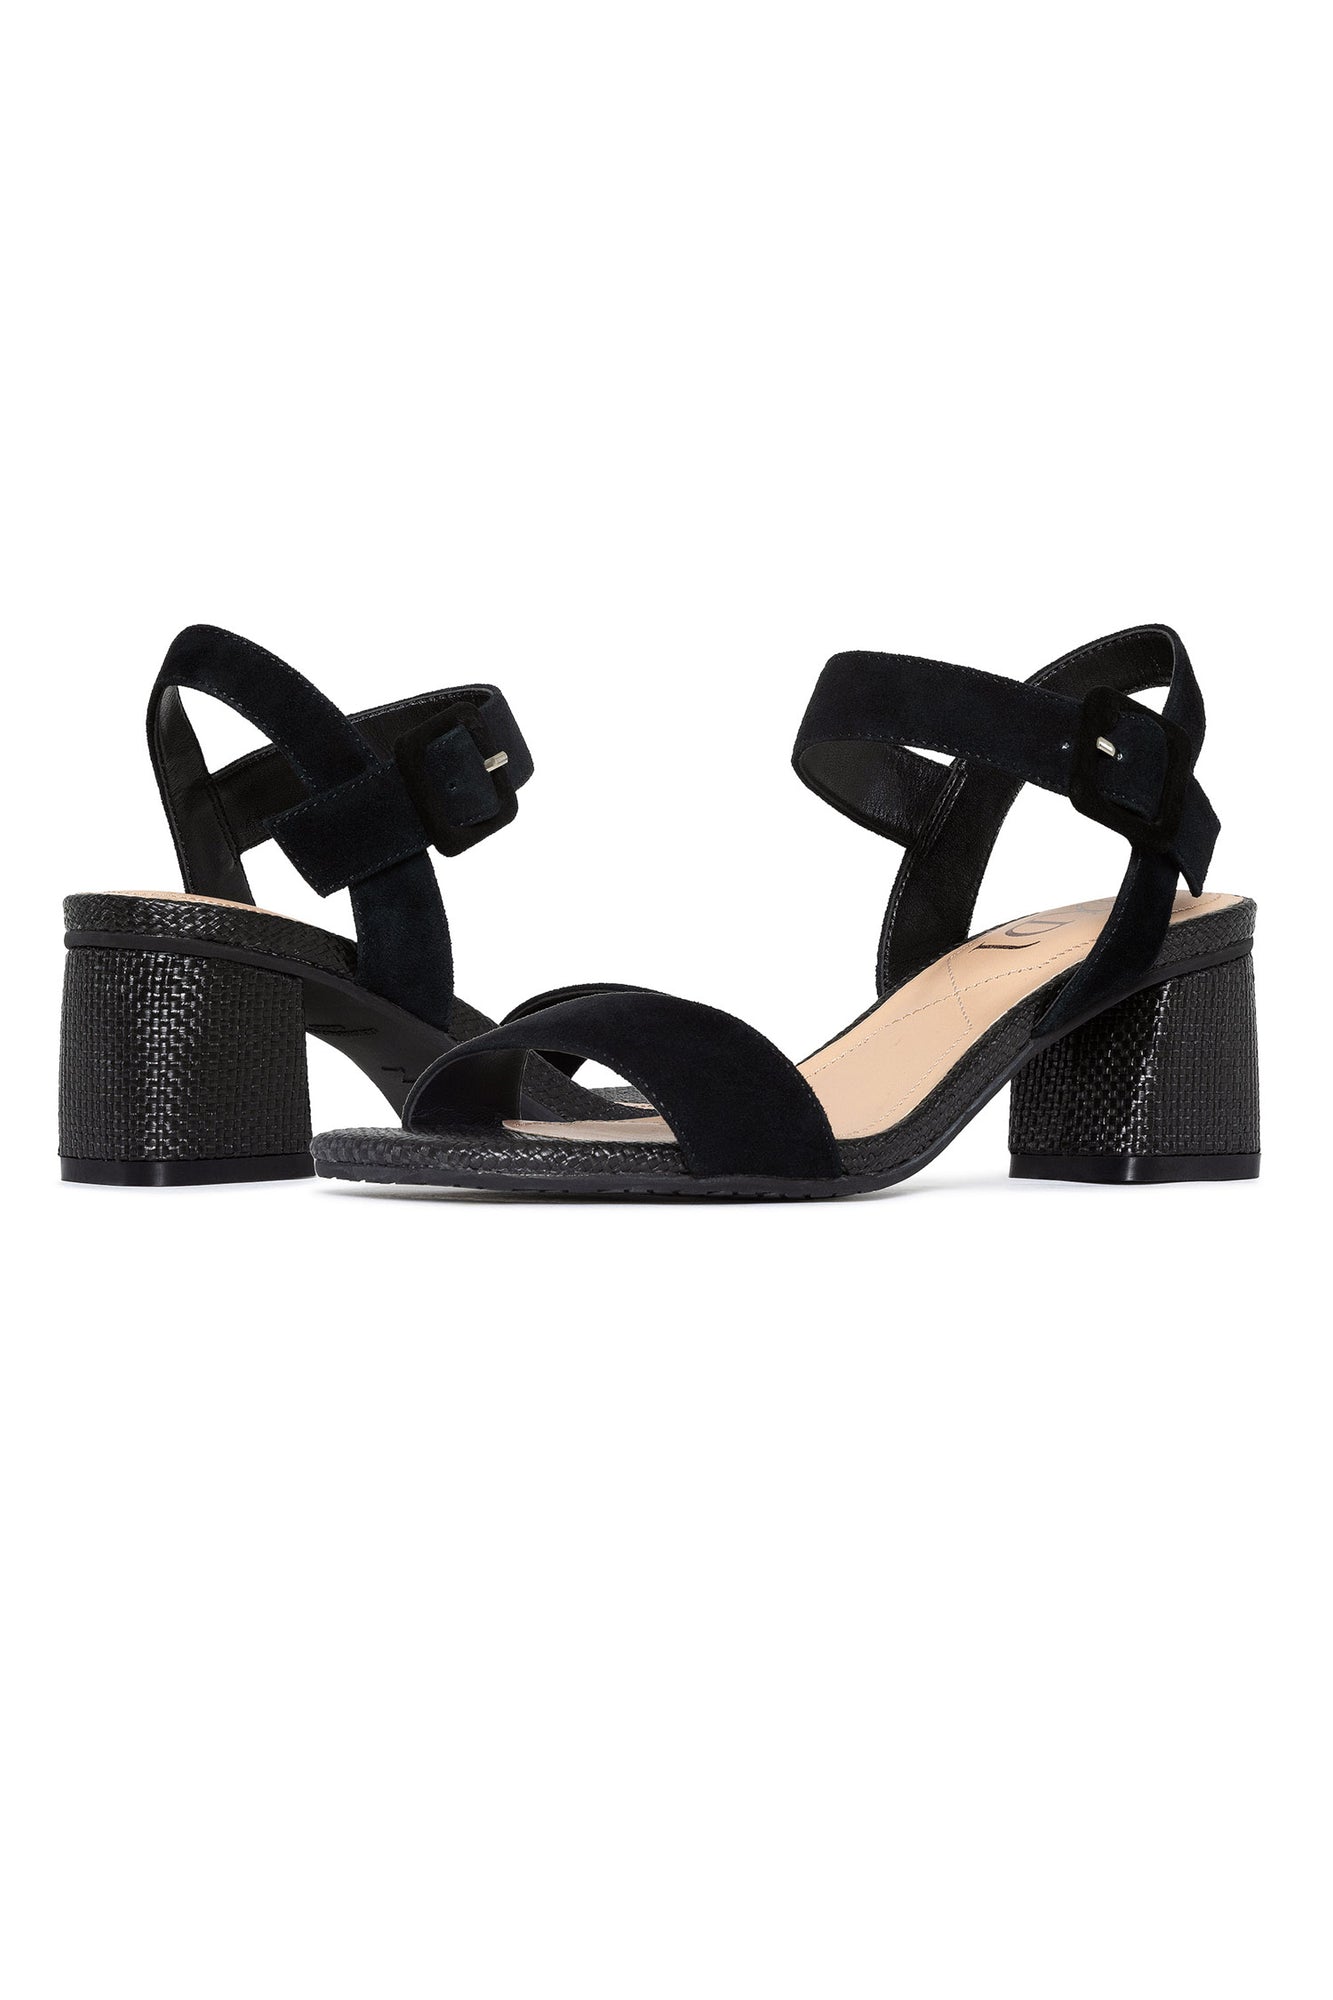 NYDJ Gaiana High Heel Sandals In Suede - Black